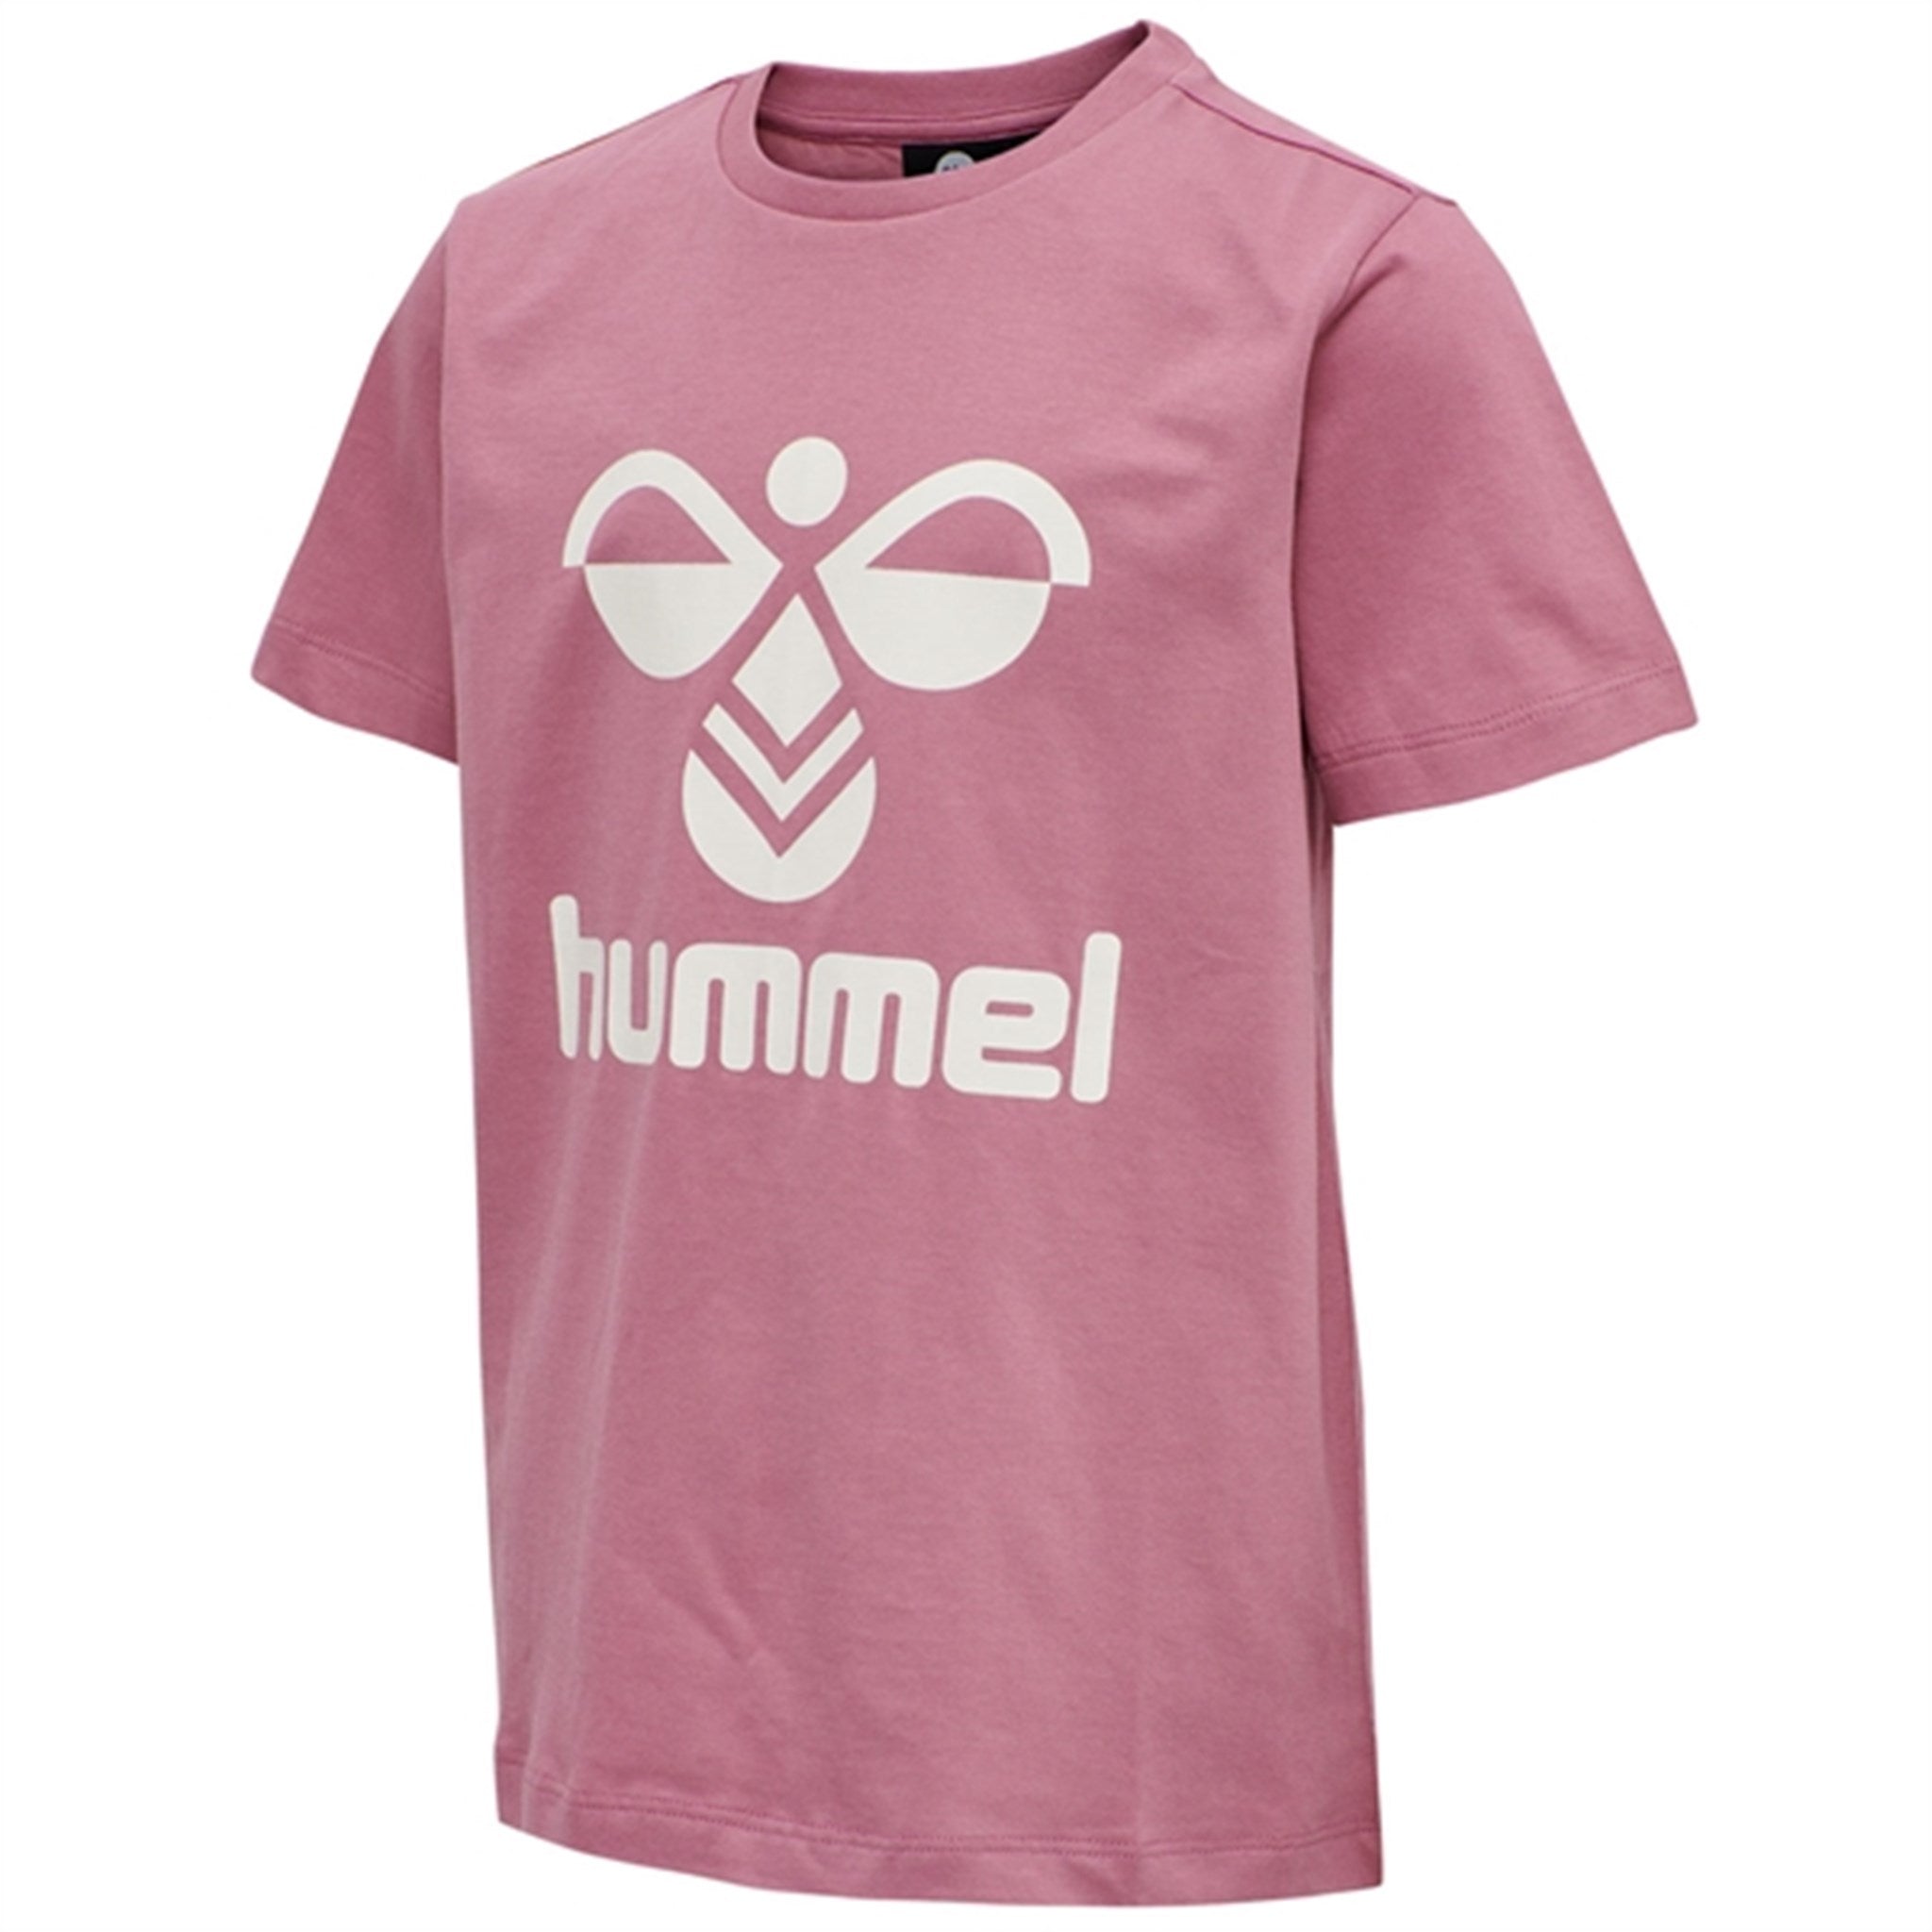 Hummel Heather Rose Tres T-Shirt S/S 3